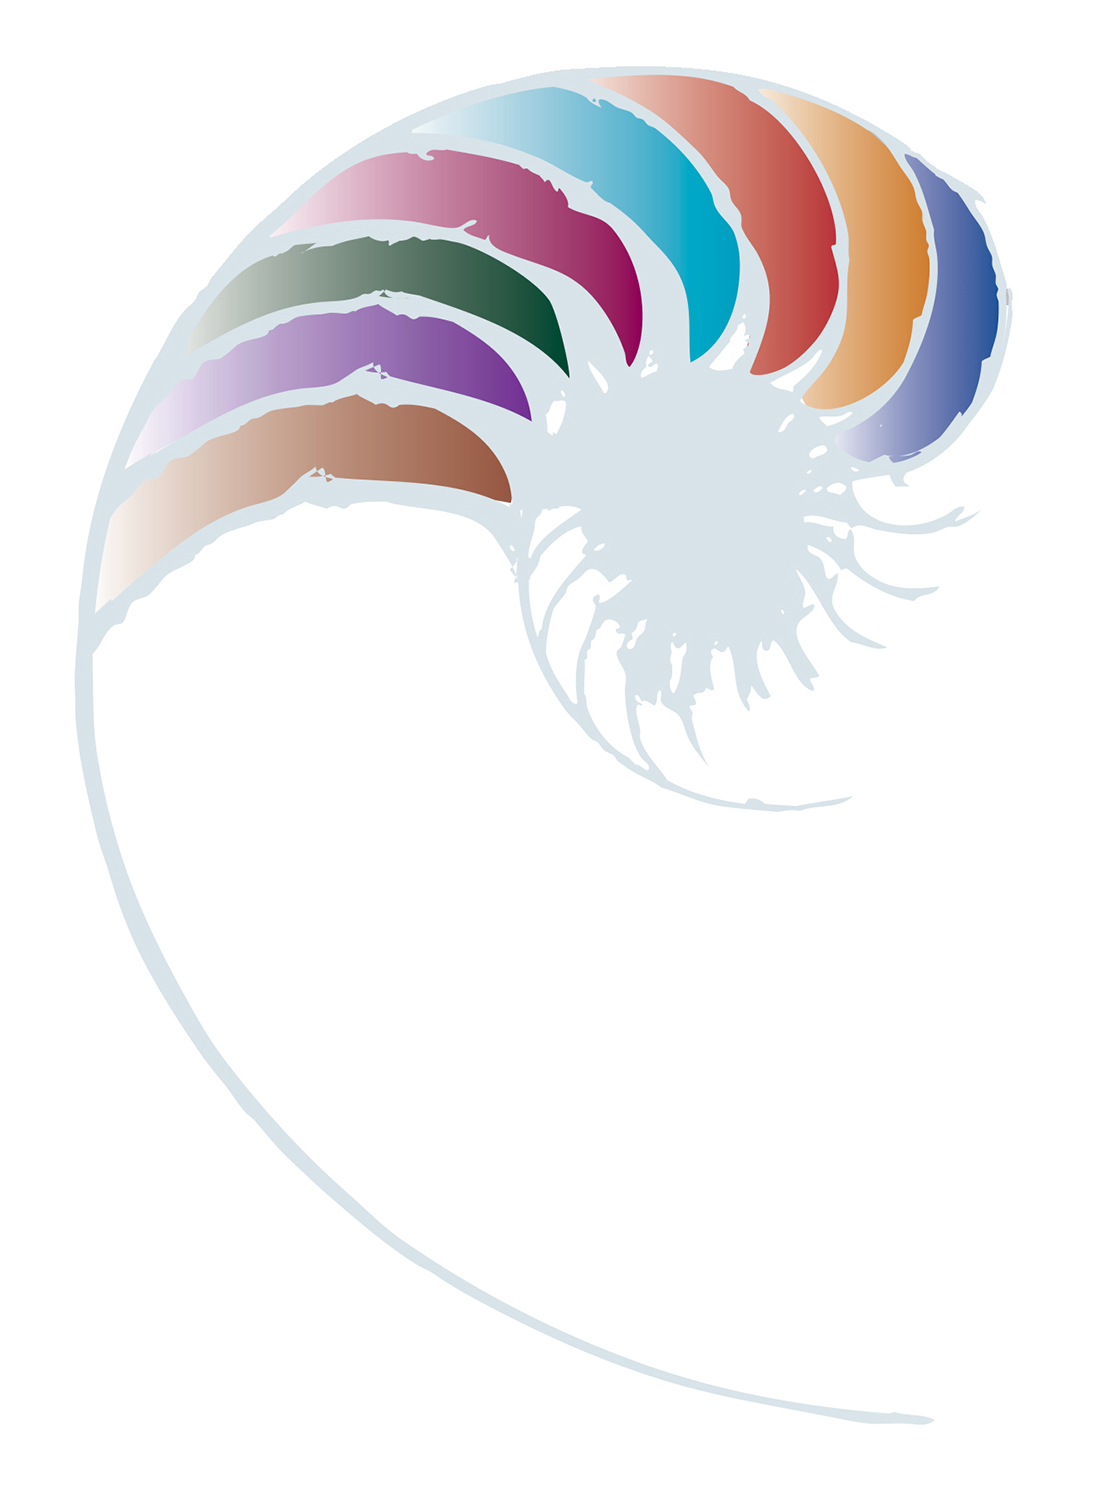 New Zealand Curriculum logo